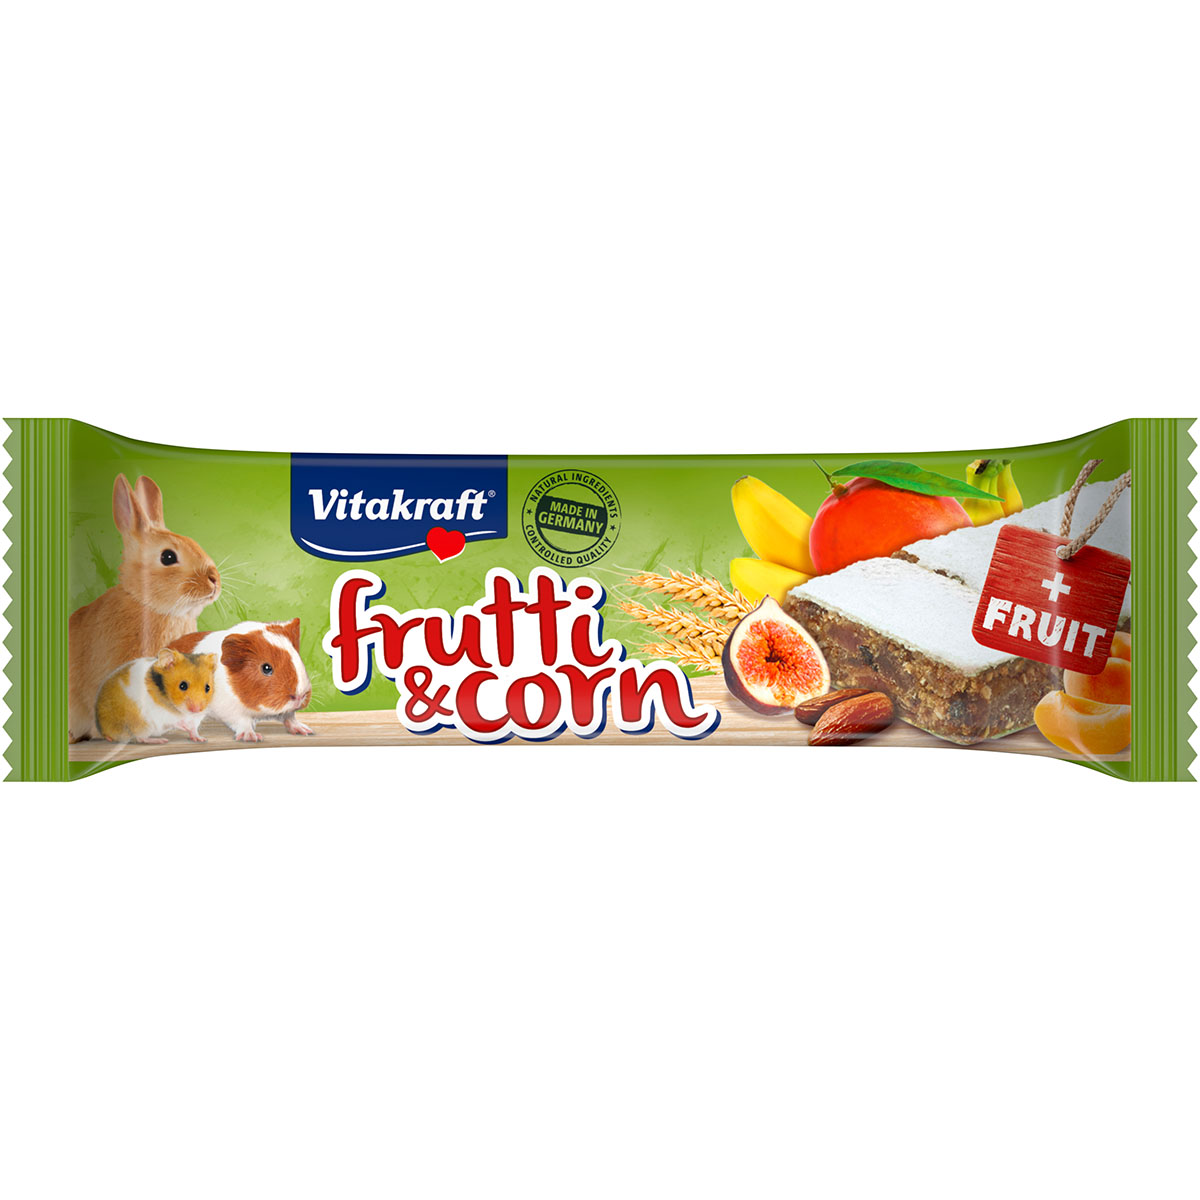 Vitakraft Frutti & Corn plátky ovoce, 30 g